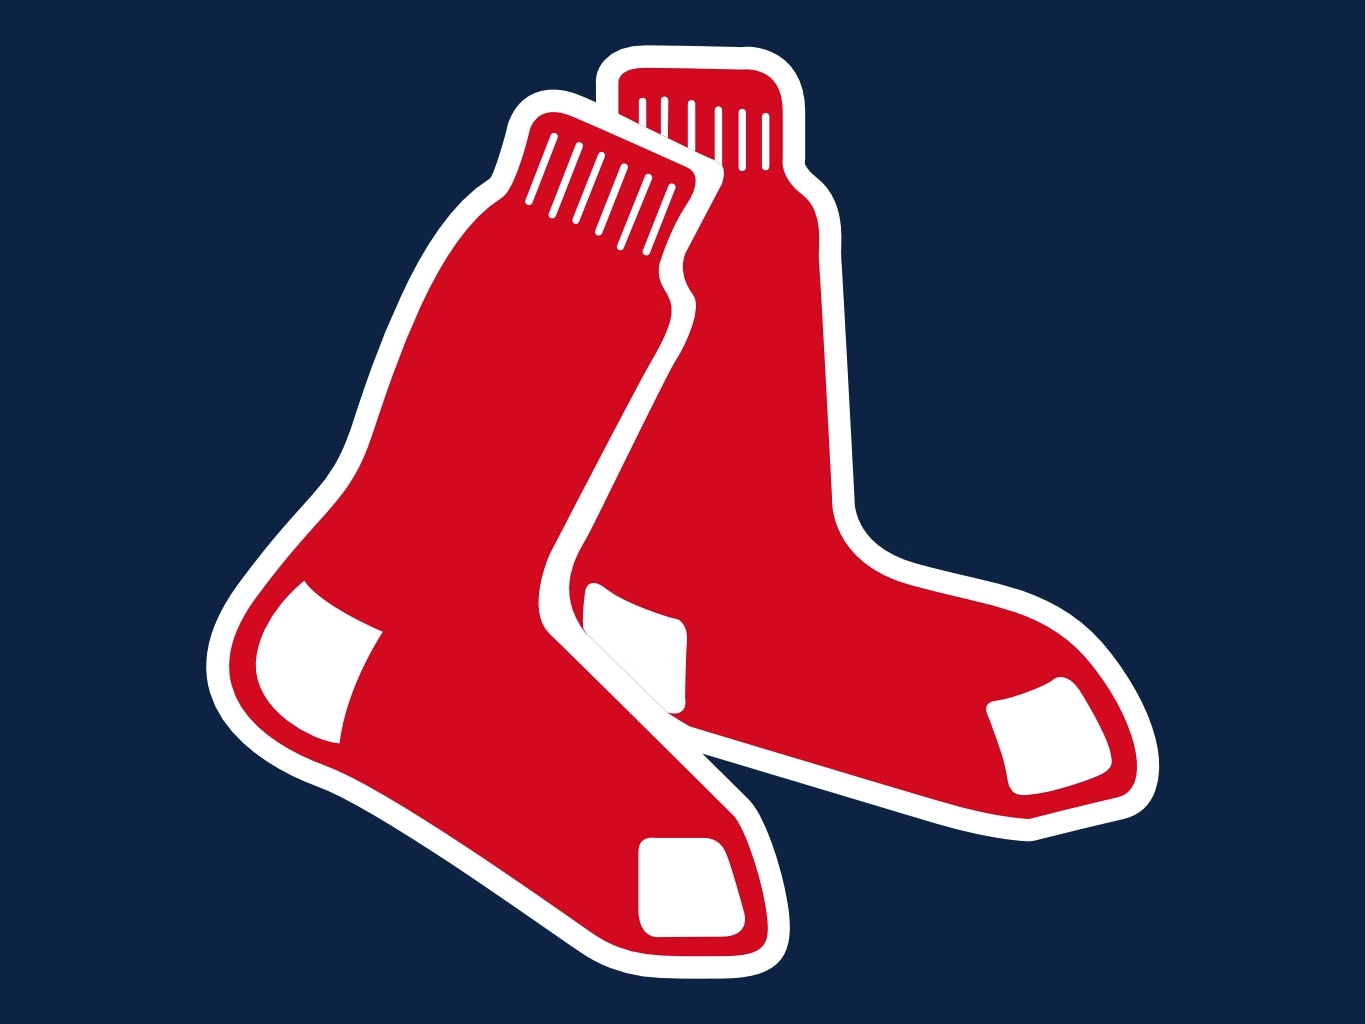 Boston Red Sox Pro Sports Teams Wiki FANDOM powered by Wikia